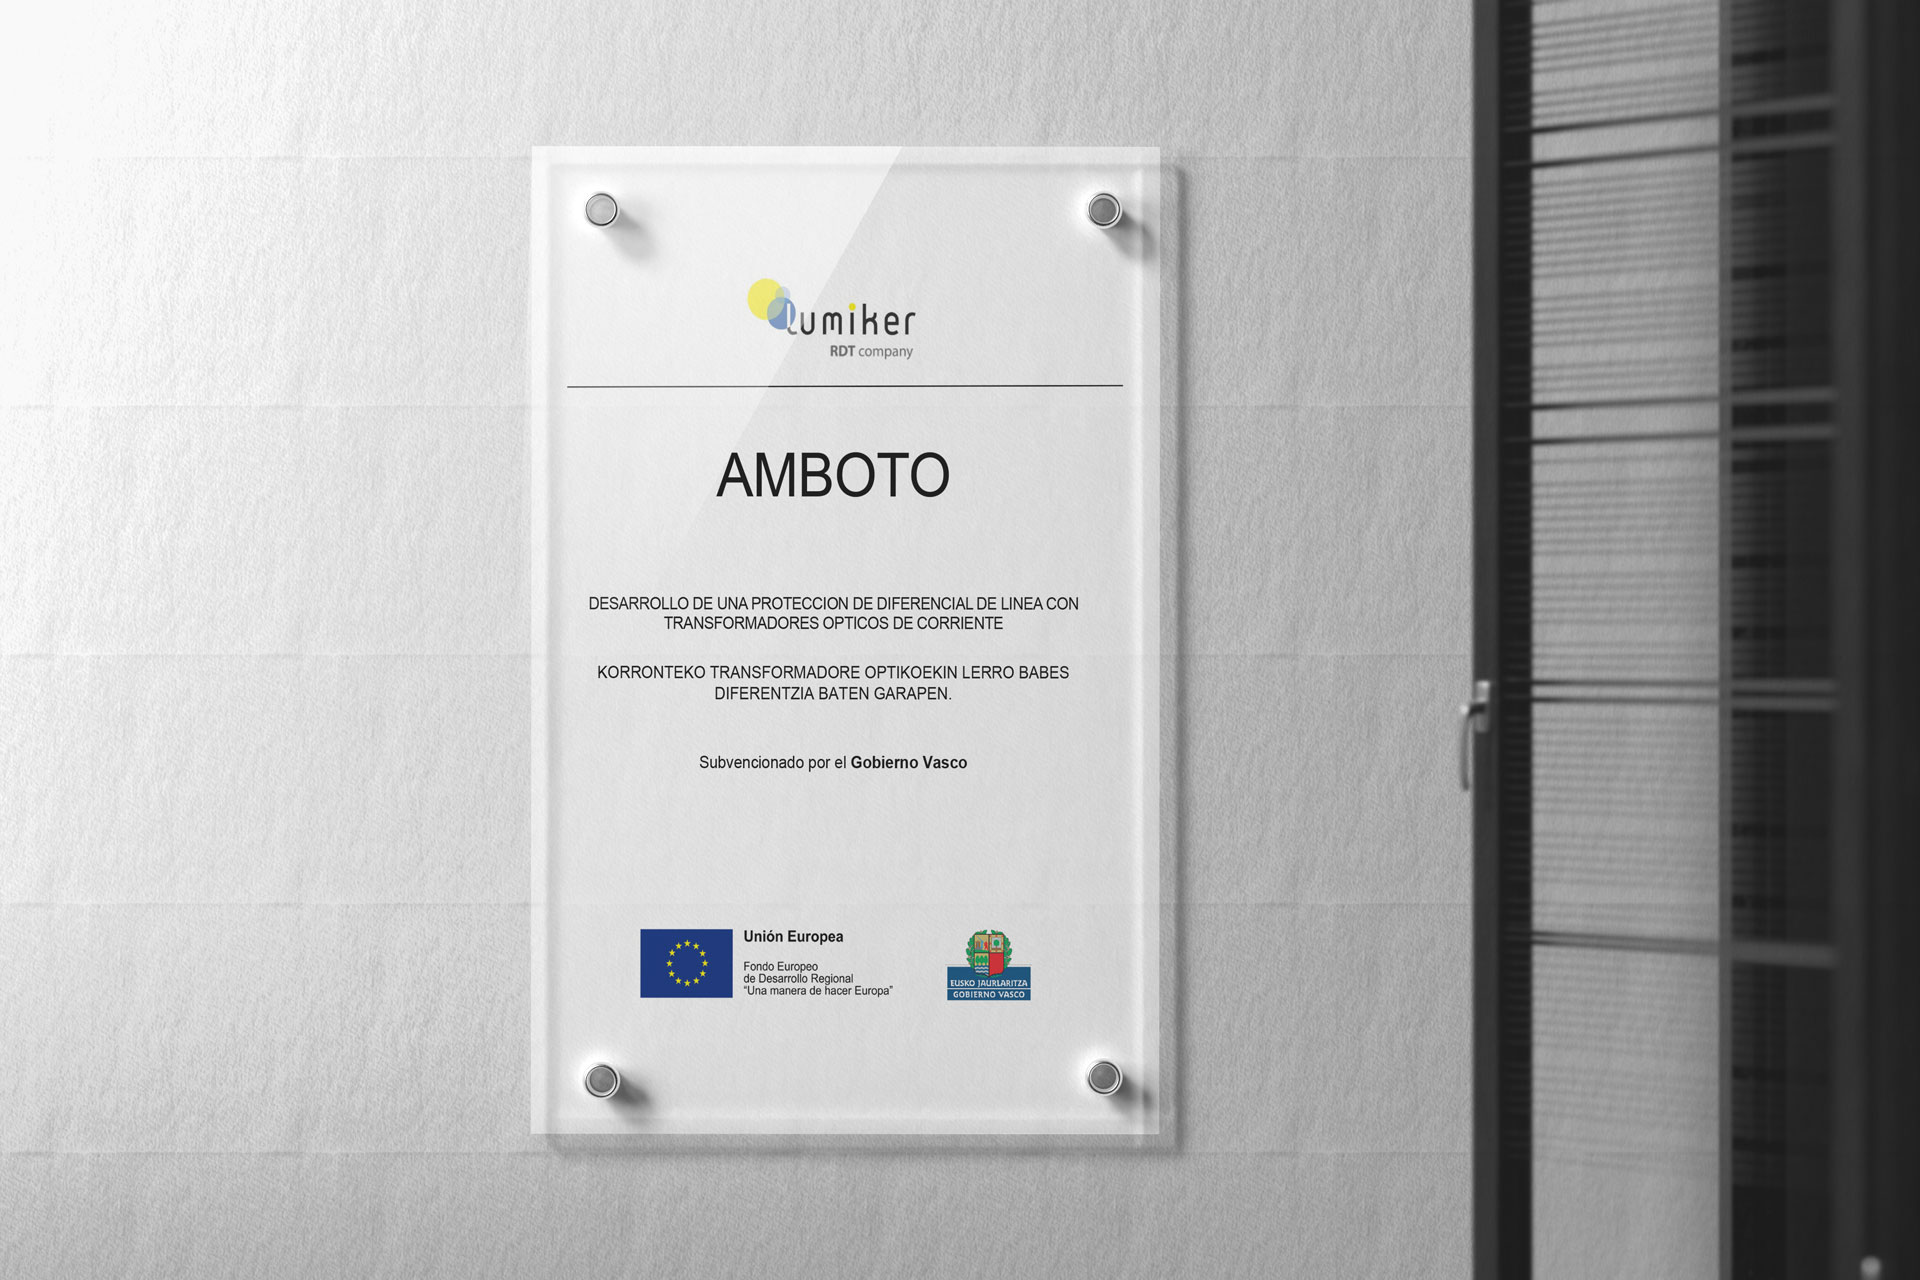 HAZITEK grant for the AMBOTO project